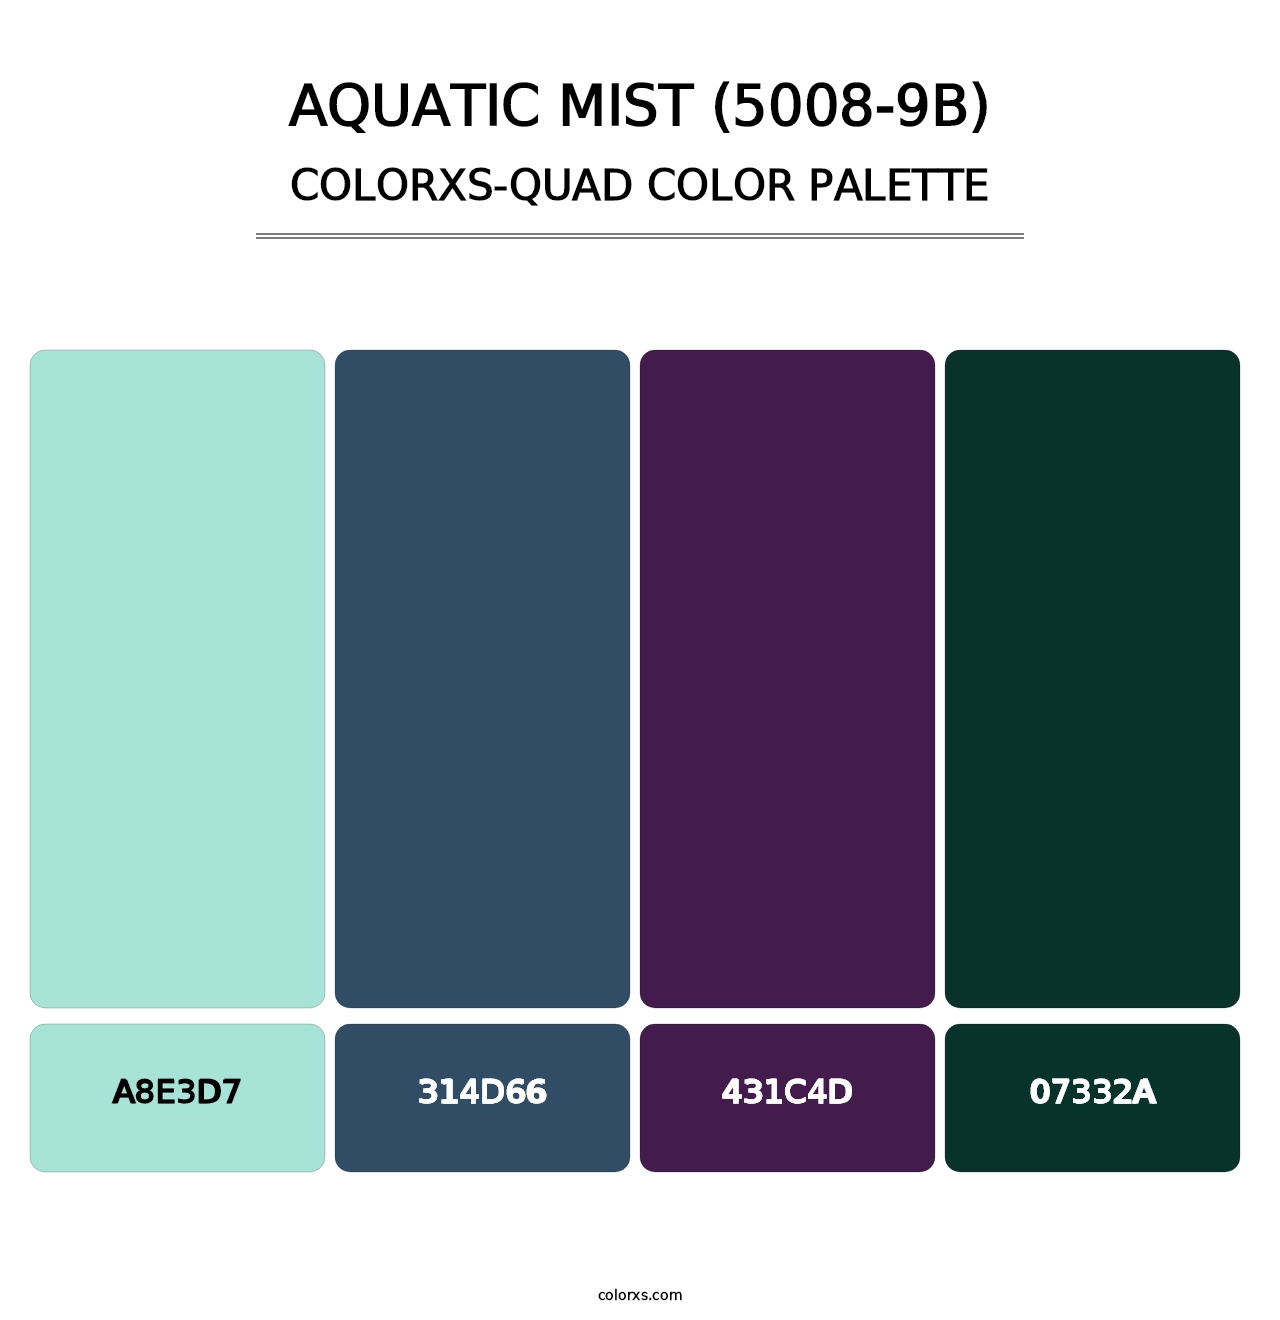 Aquatic Mist (5008-9B) - Colorxs Quad Palette